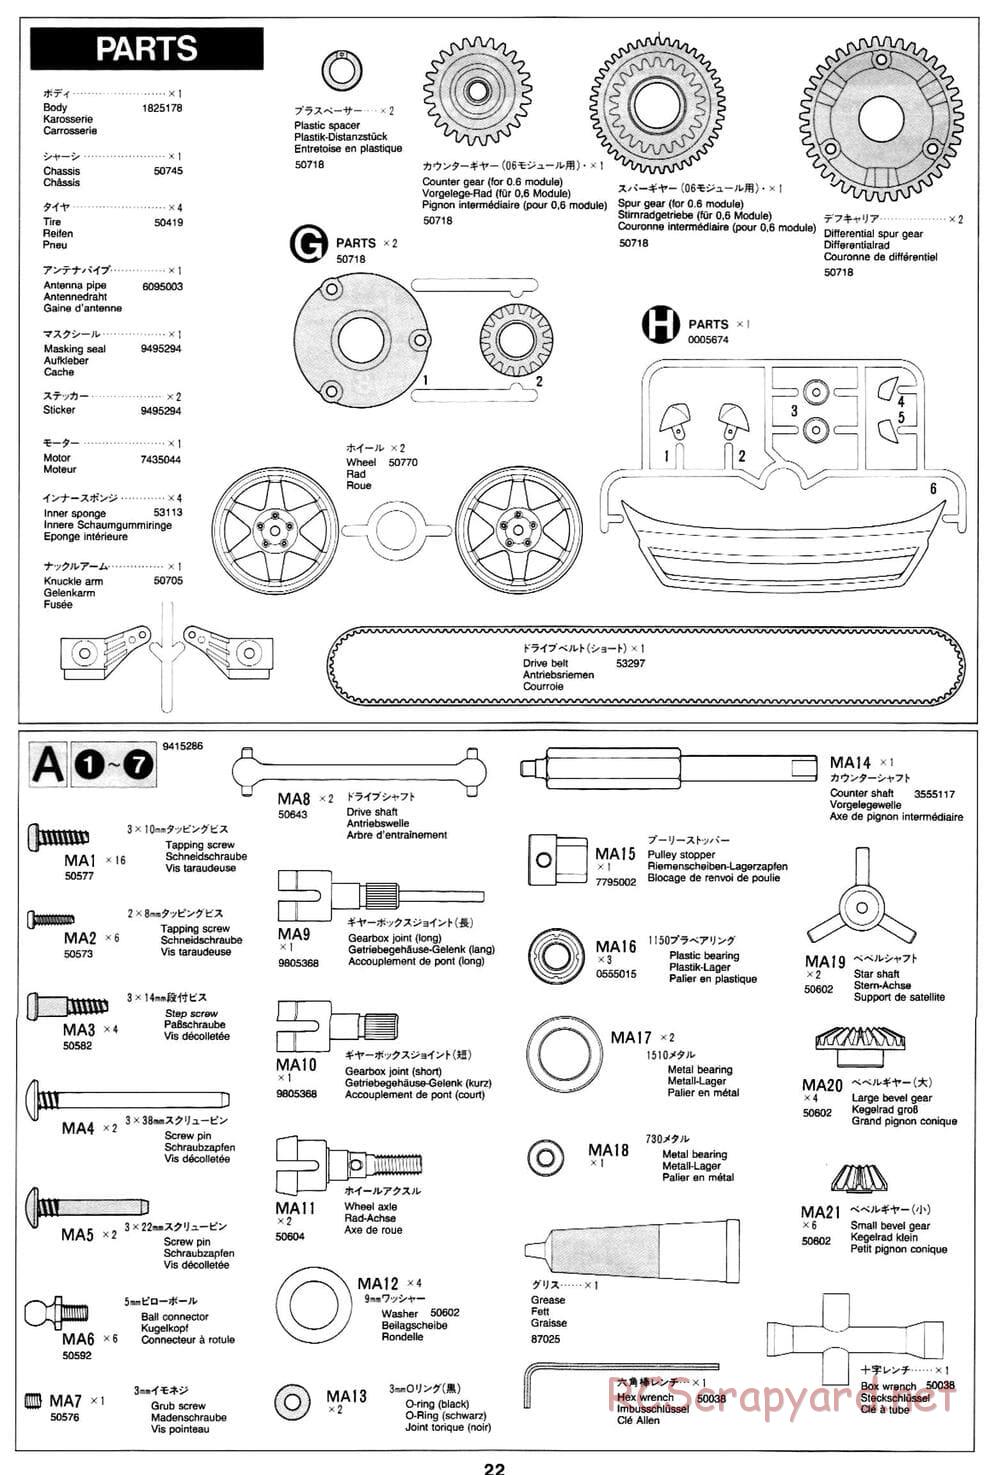 Tamiya - Toyota Corolla WRC - TA-03FS Chassis - Manual - Page 22